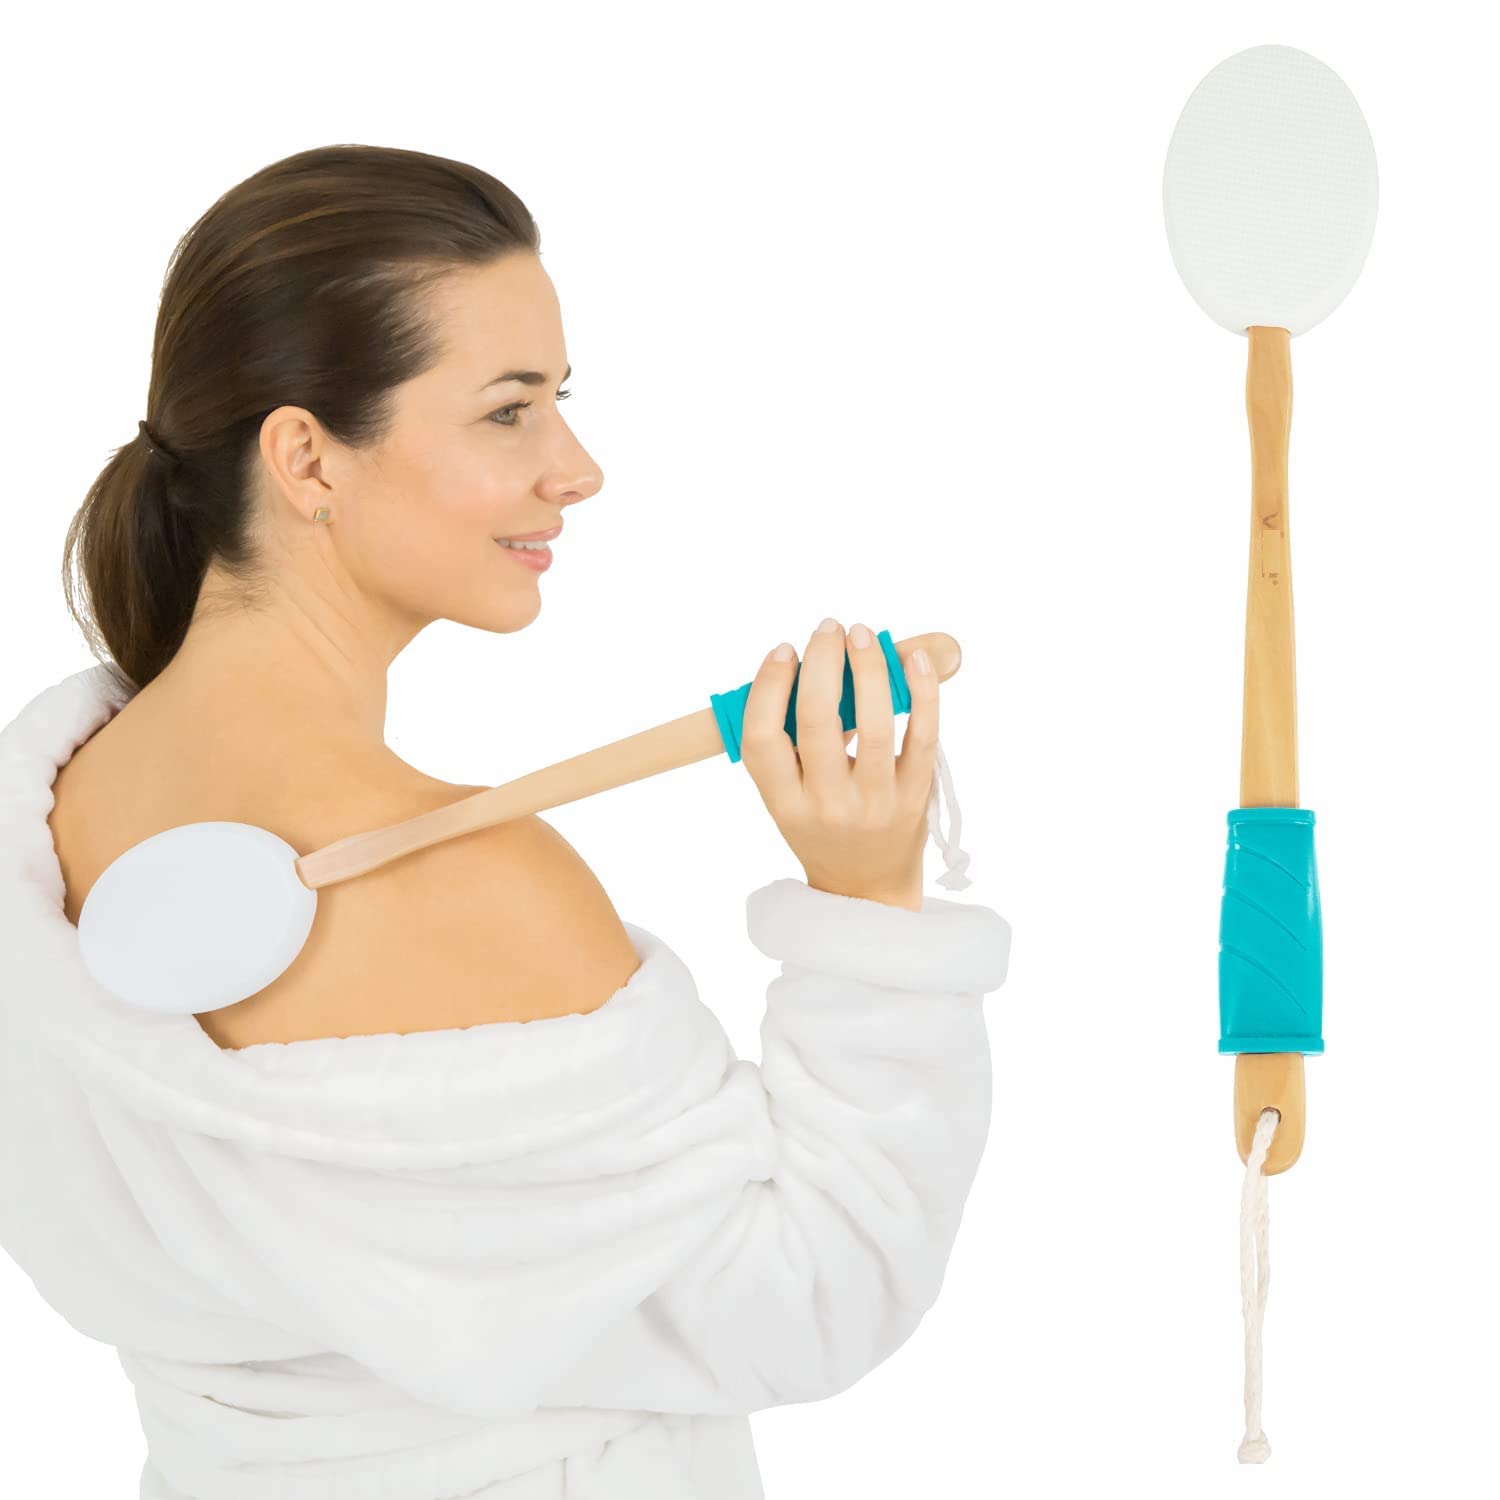 long handle cream back applicator to apply sunscreen